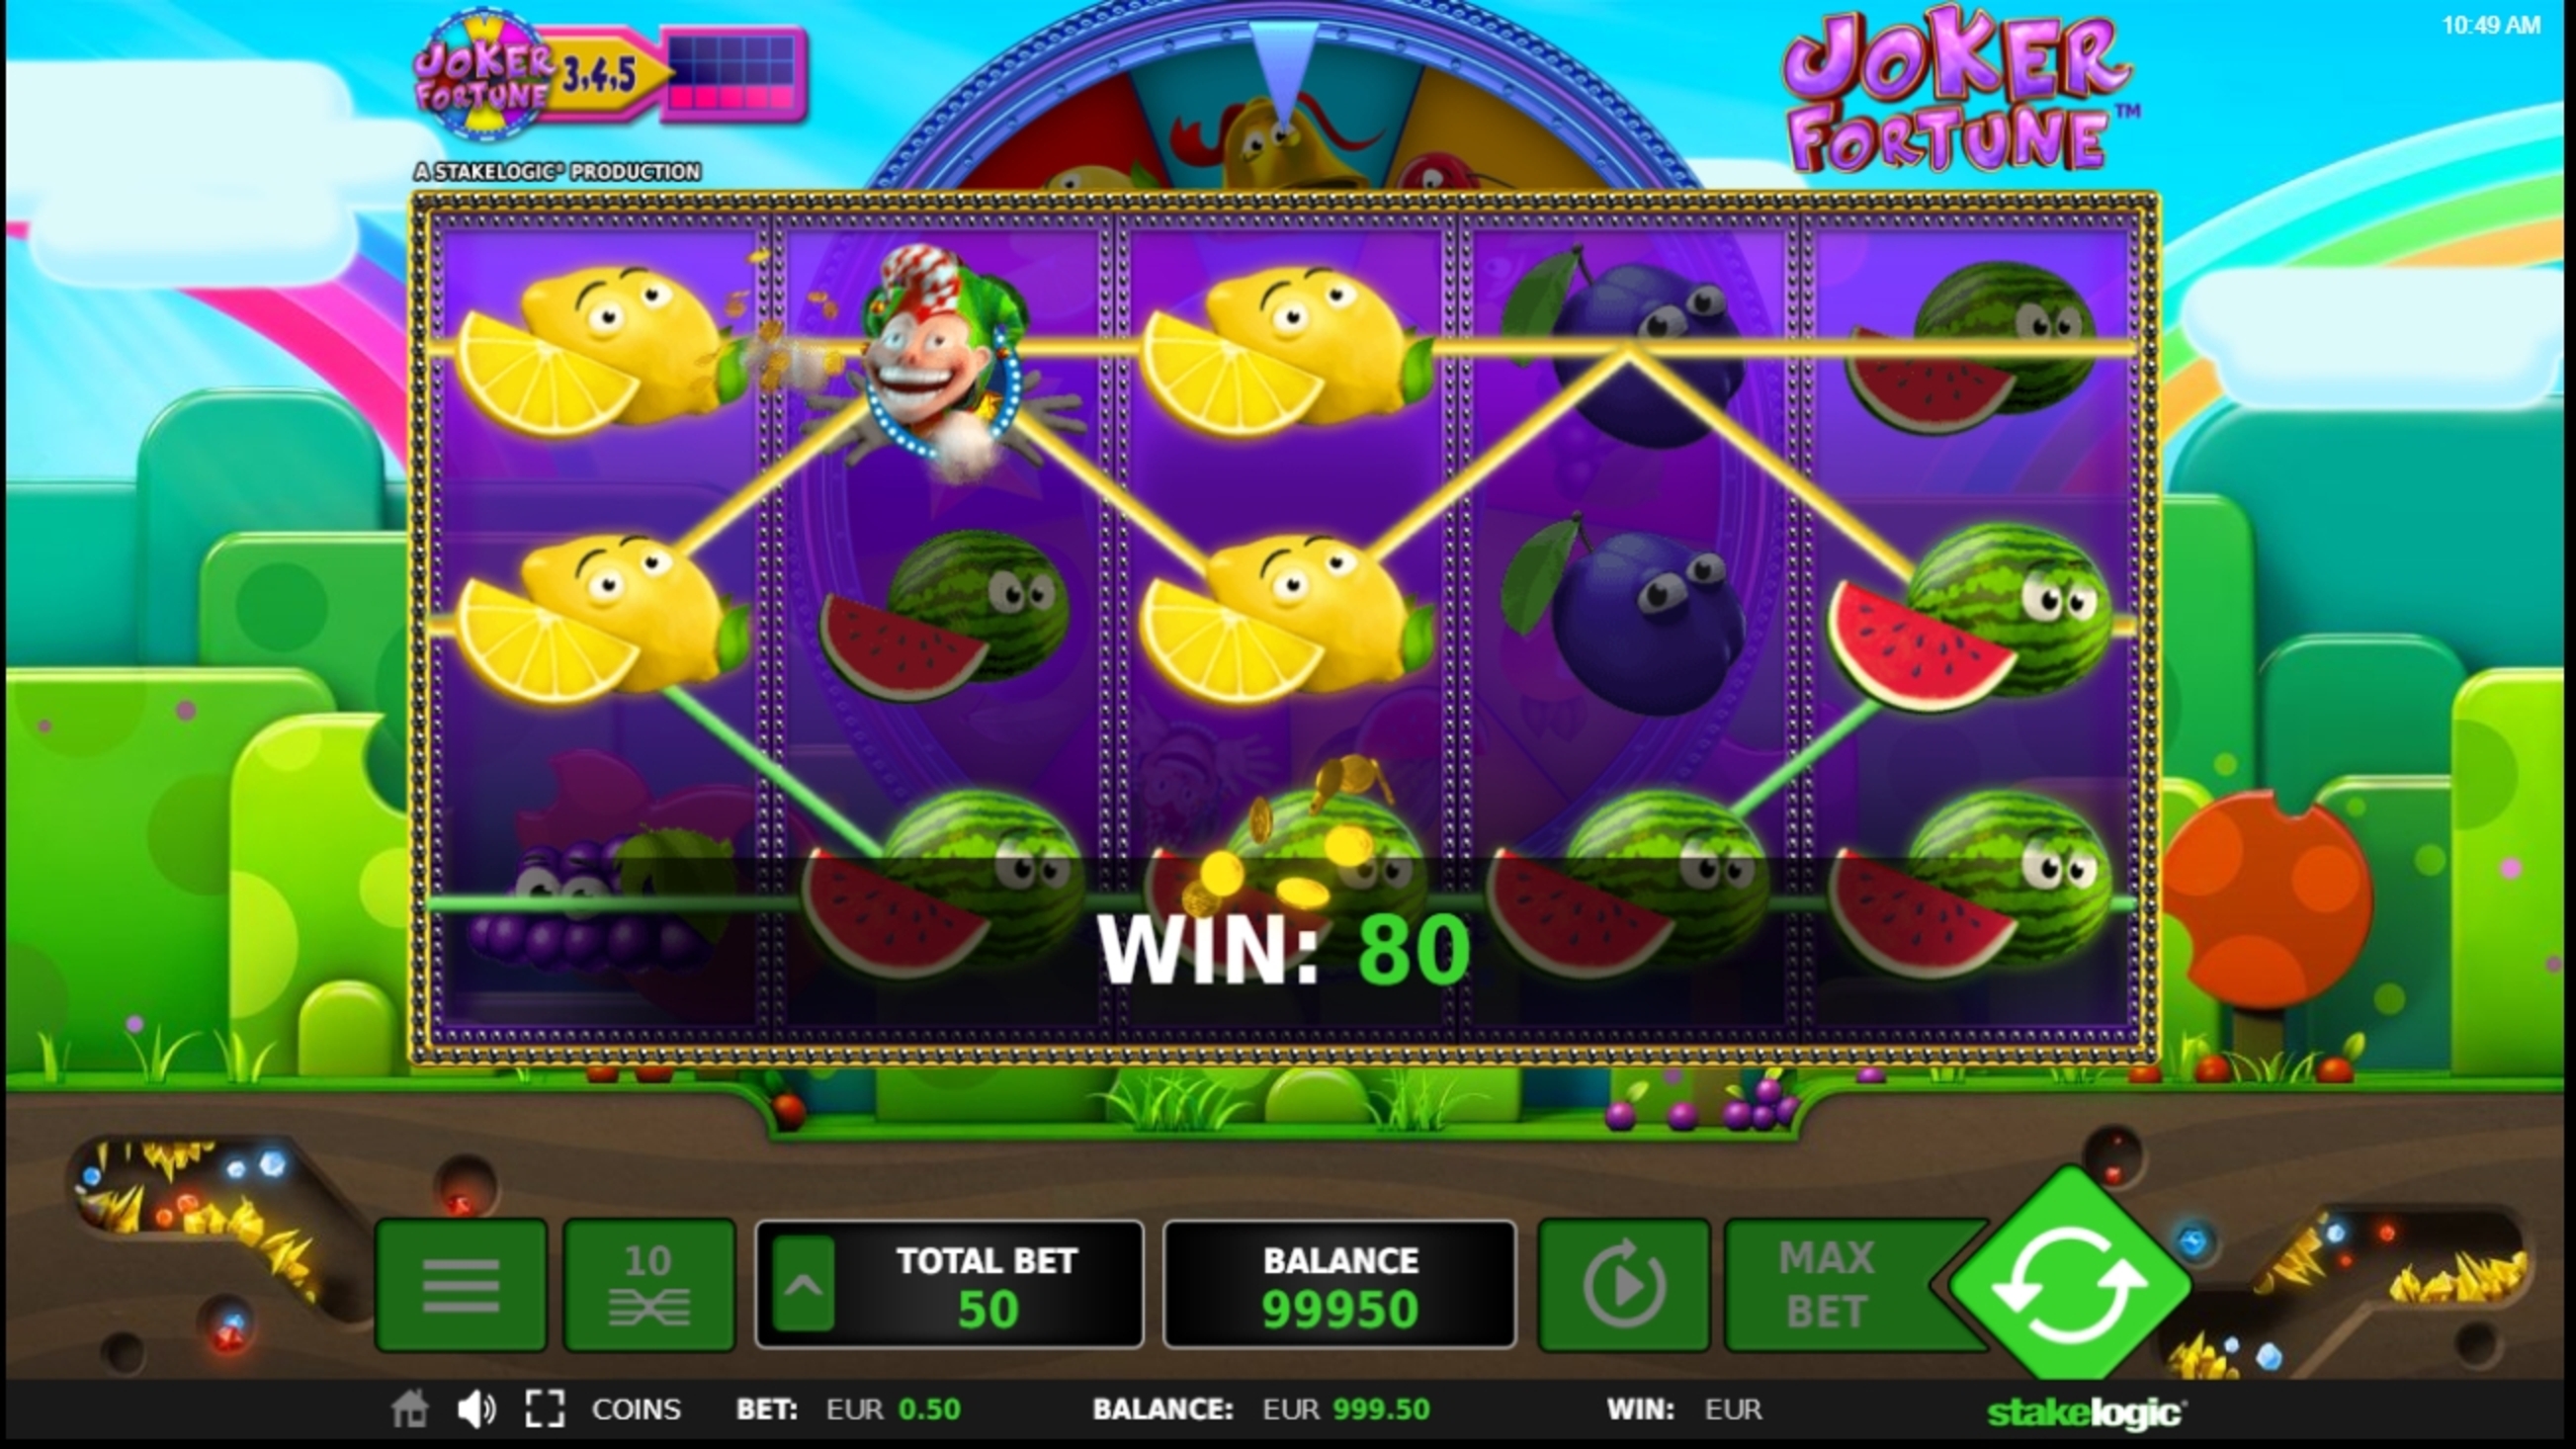 Win Money in Joker Fortune Free Slot Game by Stakelogic